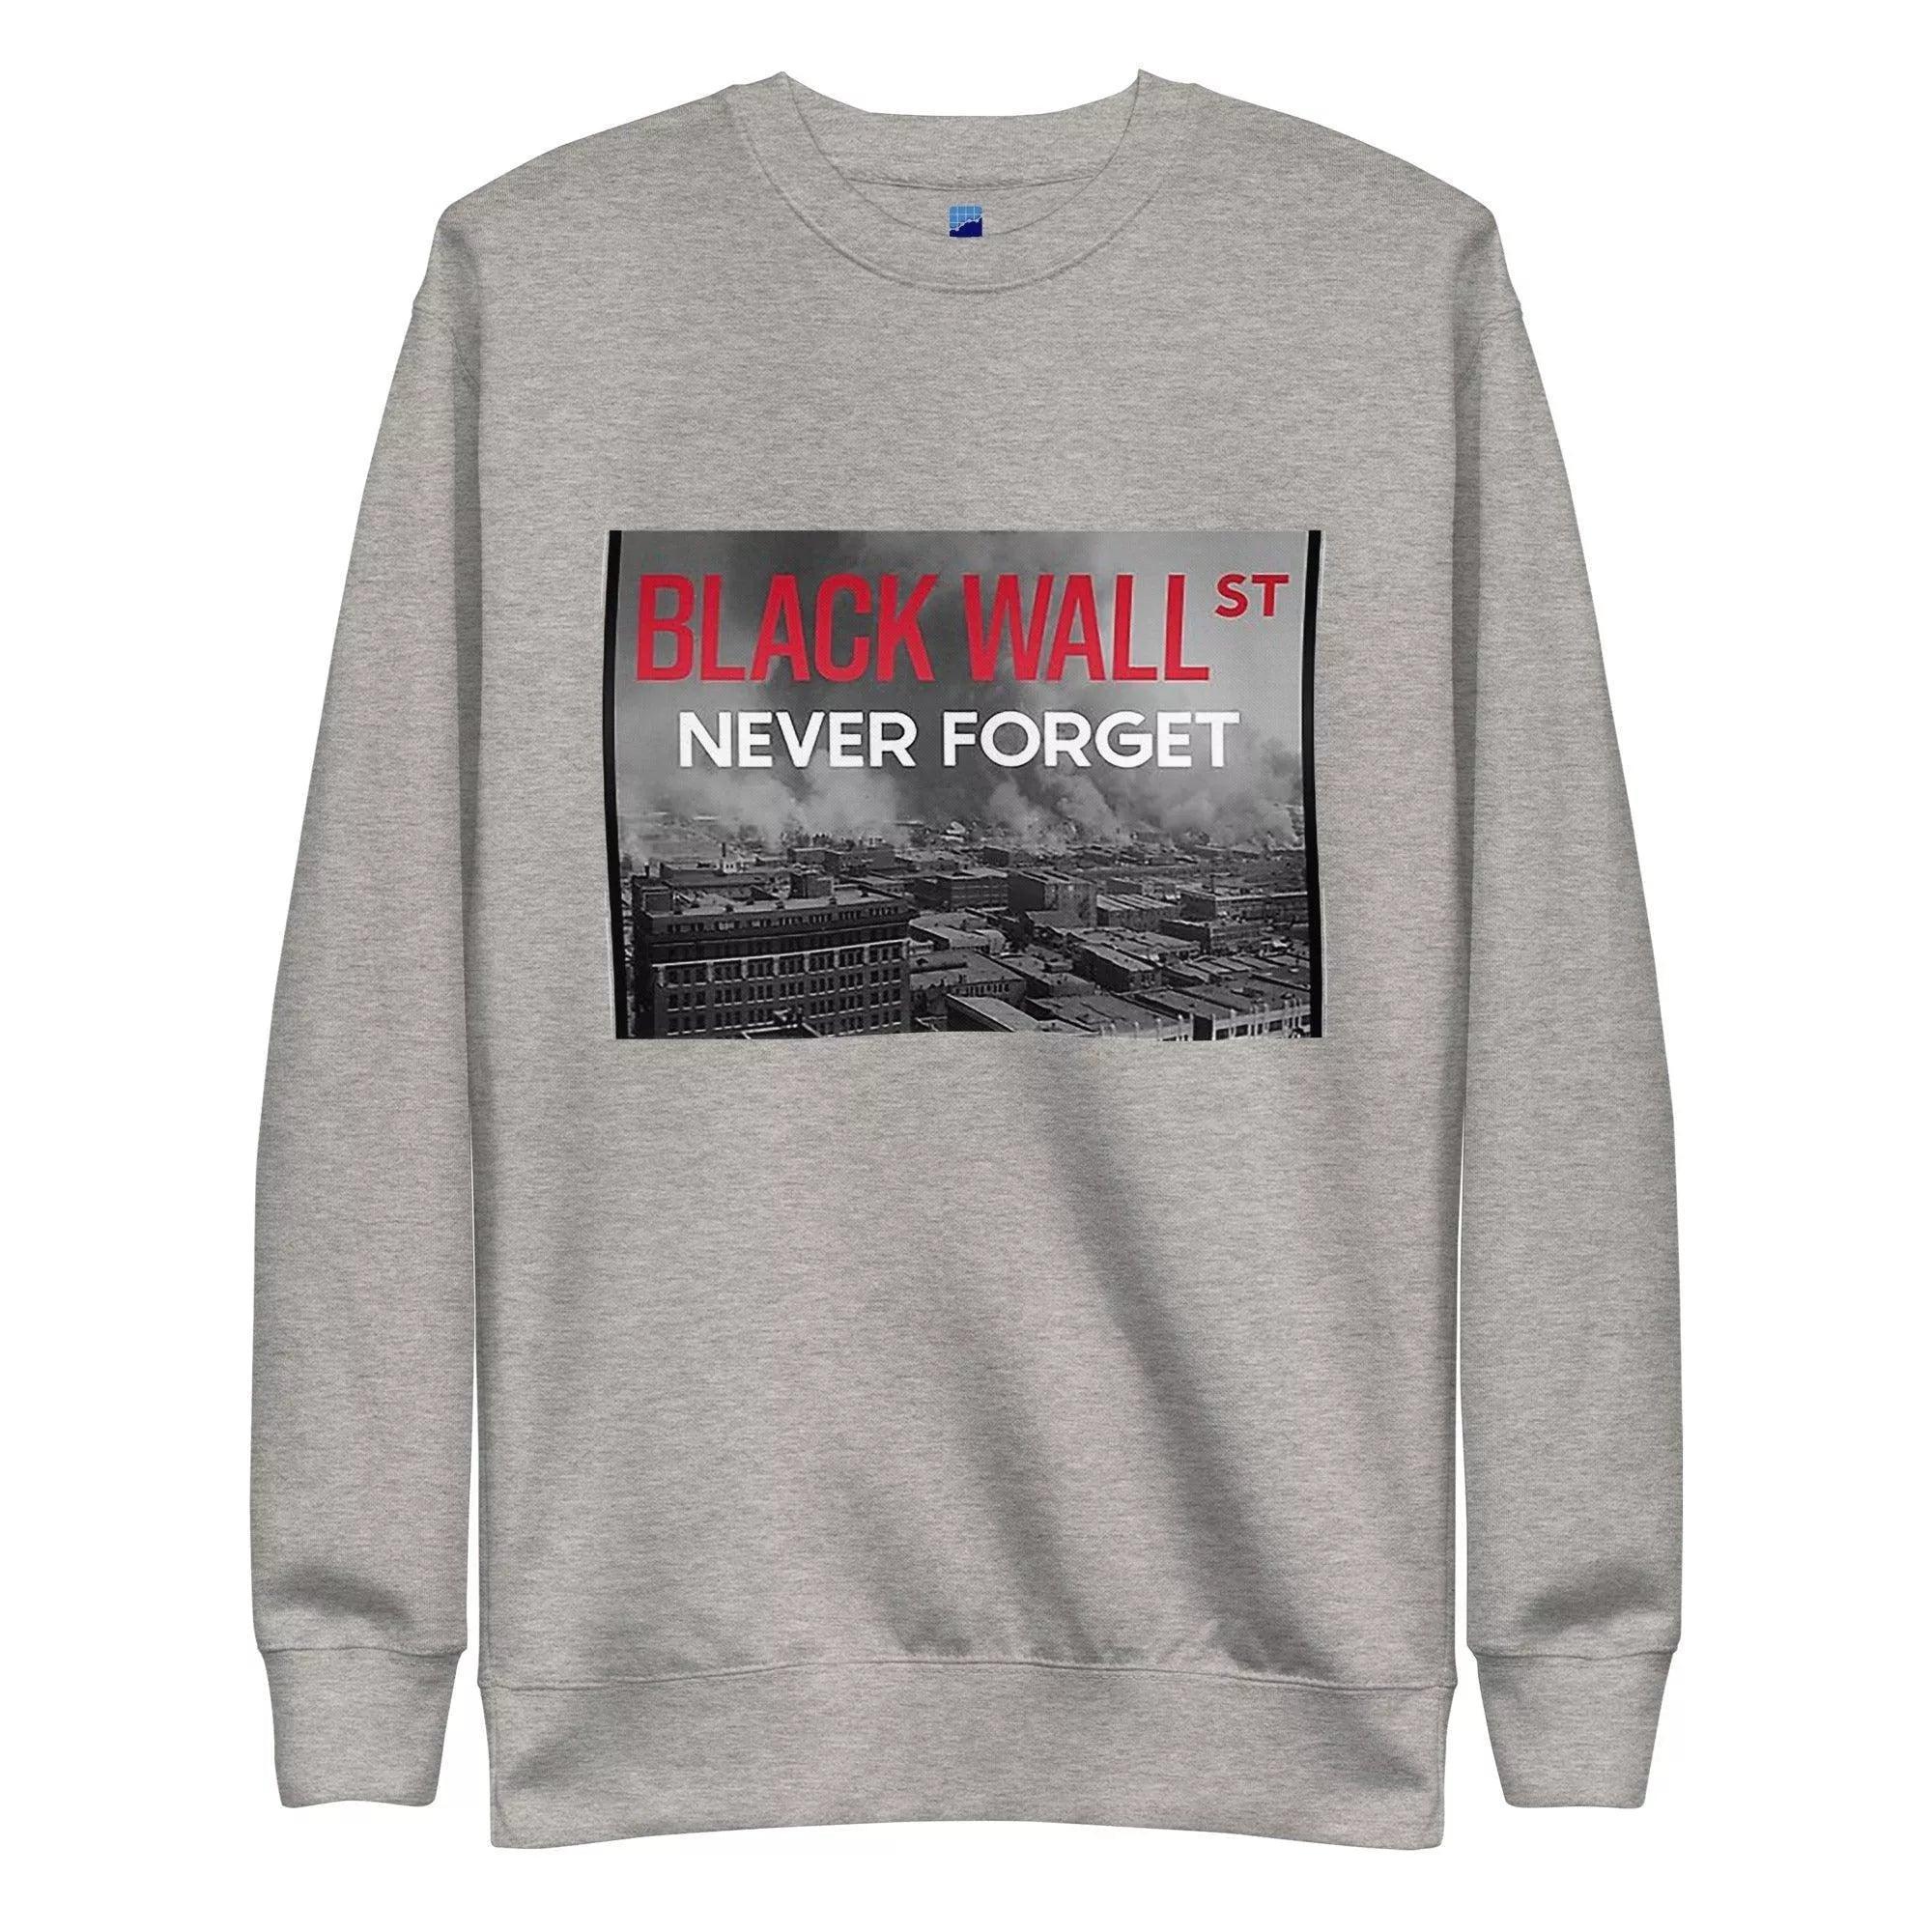 Never Forget Black Wall Street Sweatshirt - InvestmenTees